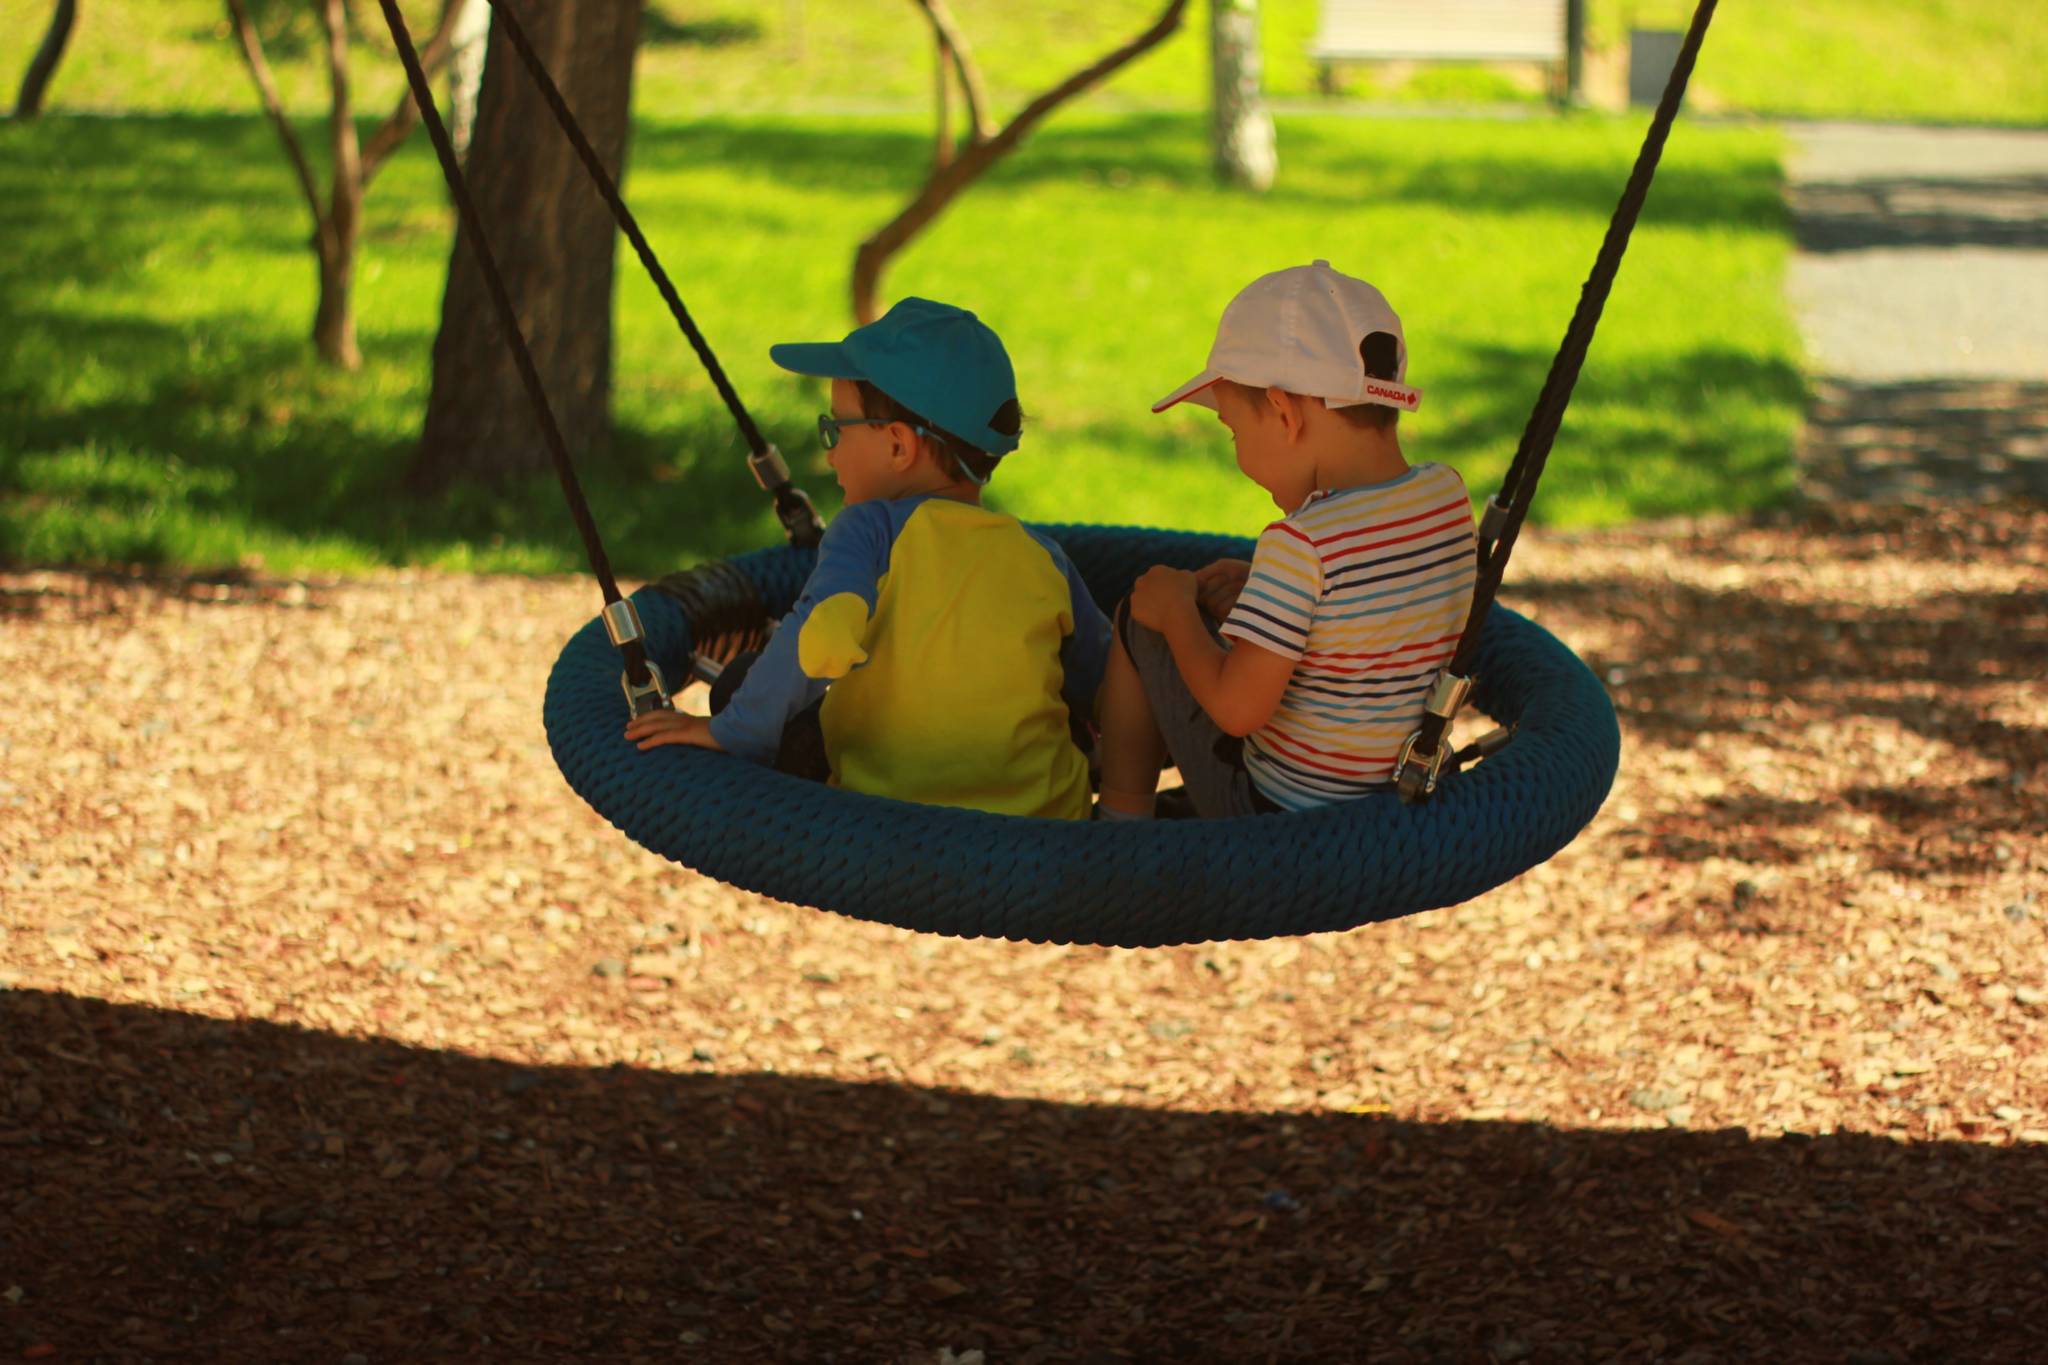 Biba upgrades playgrounds to get kids active